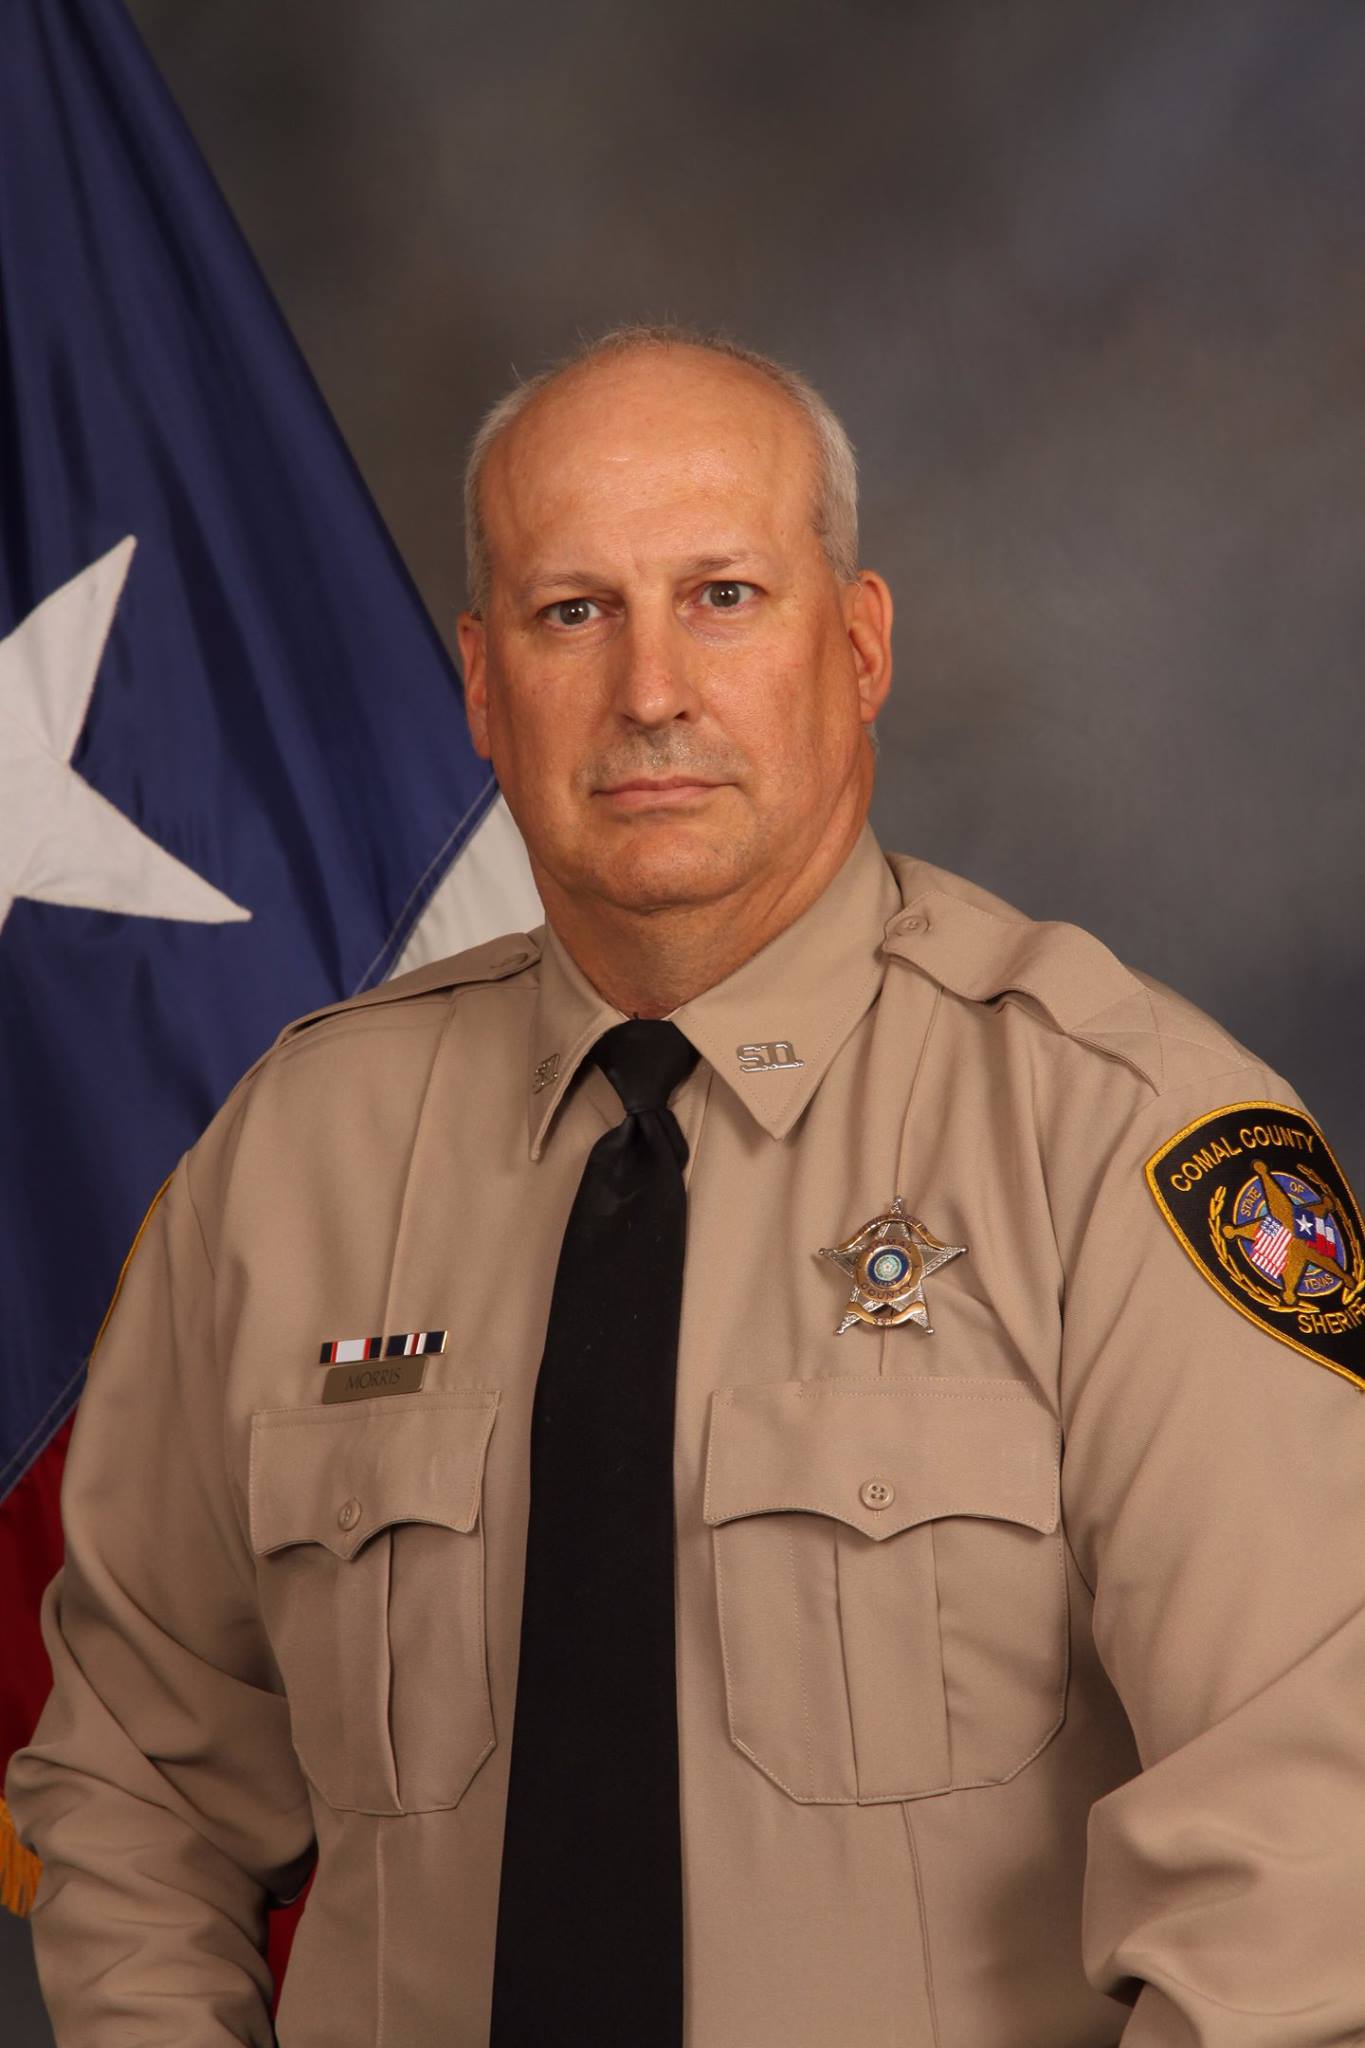 Deputy Steve Morris